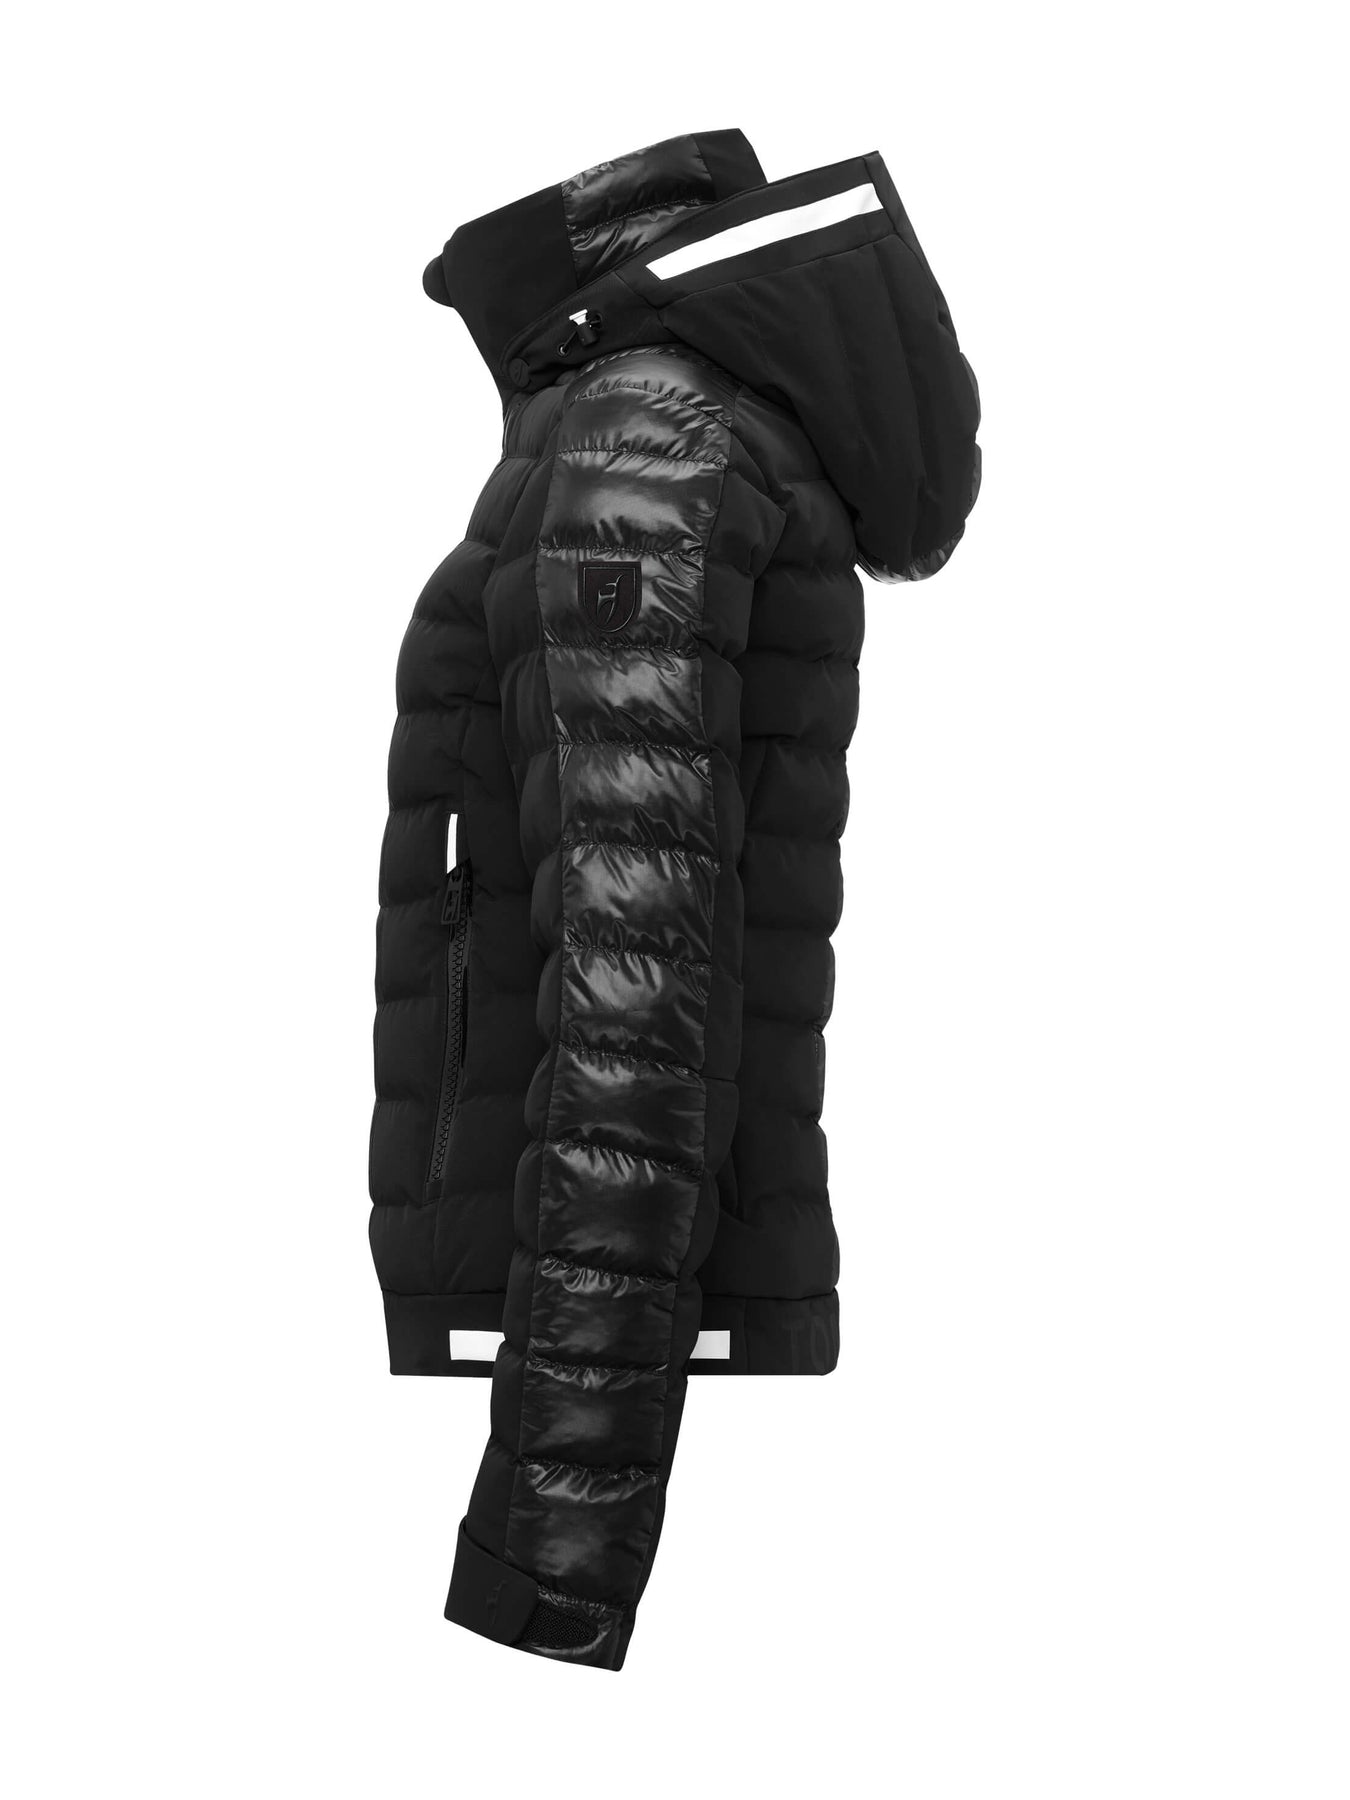 Norma Ski Jacket